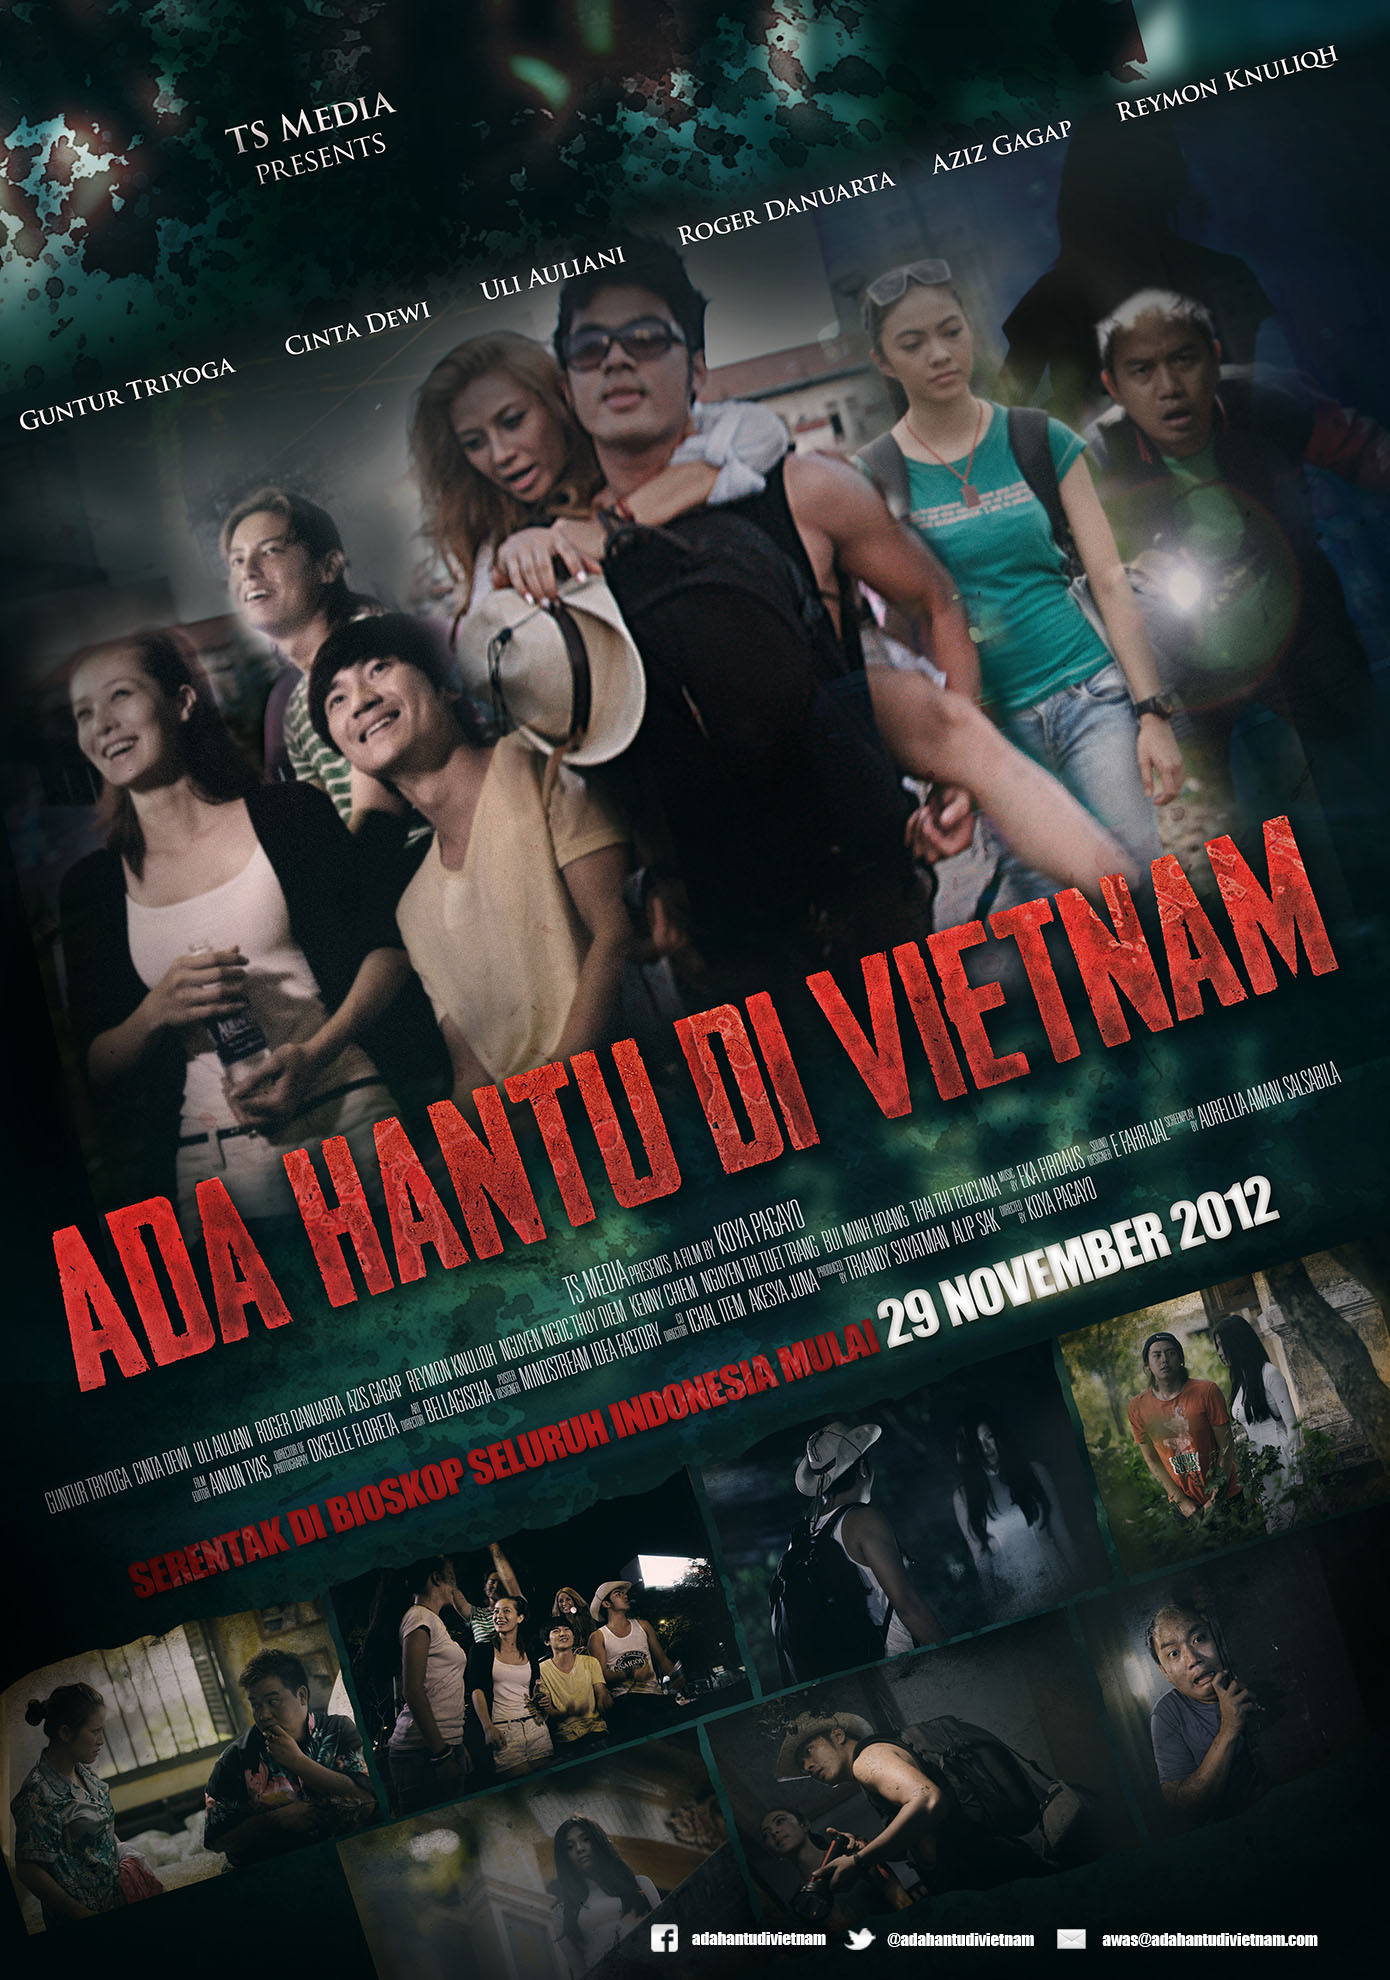 film bioskop indonesia terbaru 2012 full movie